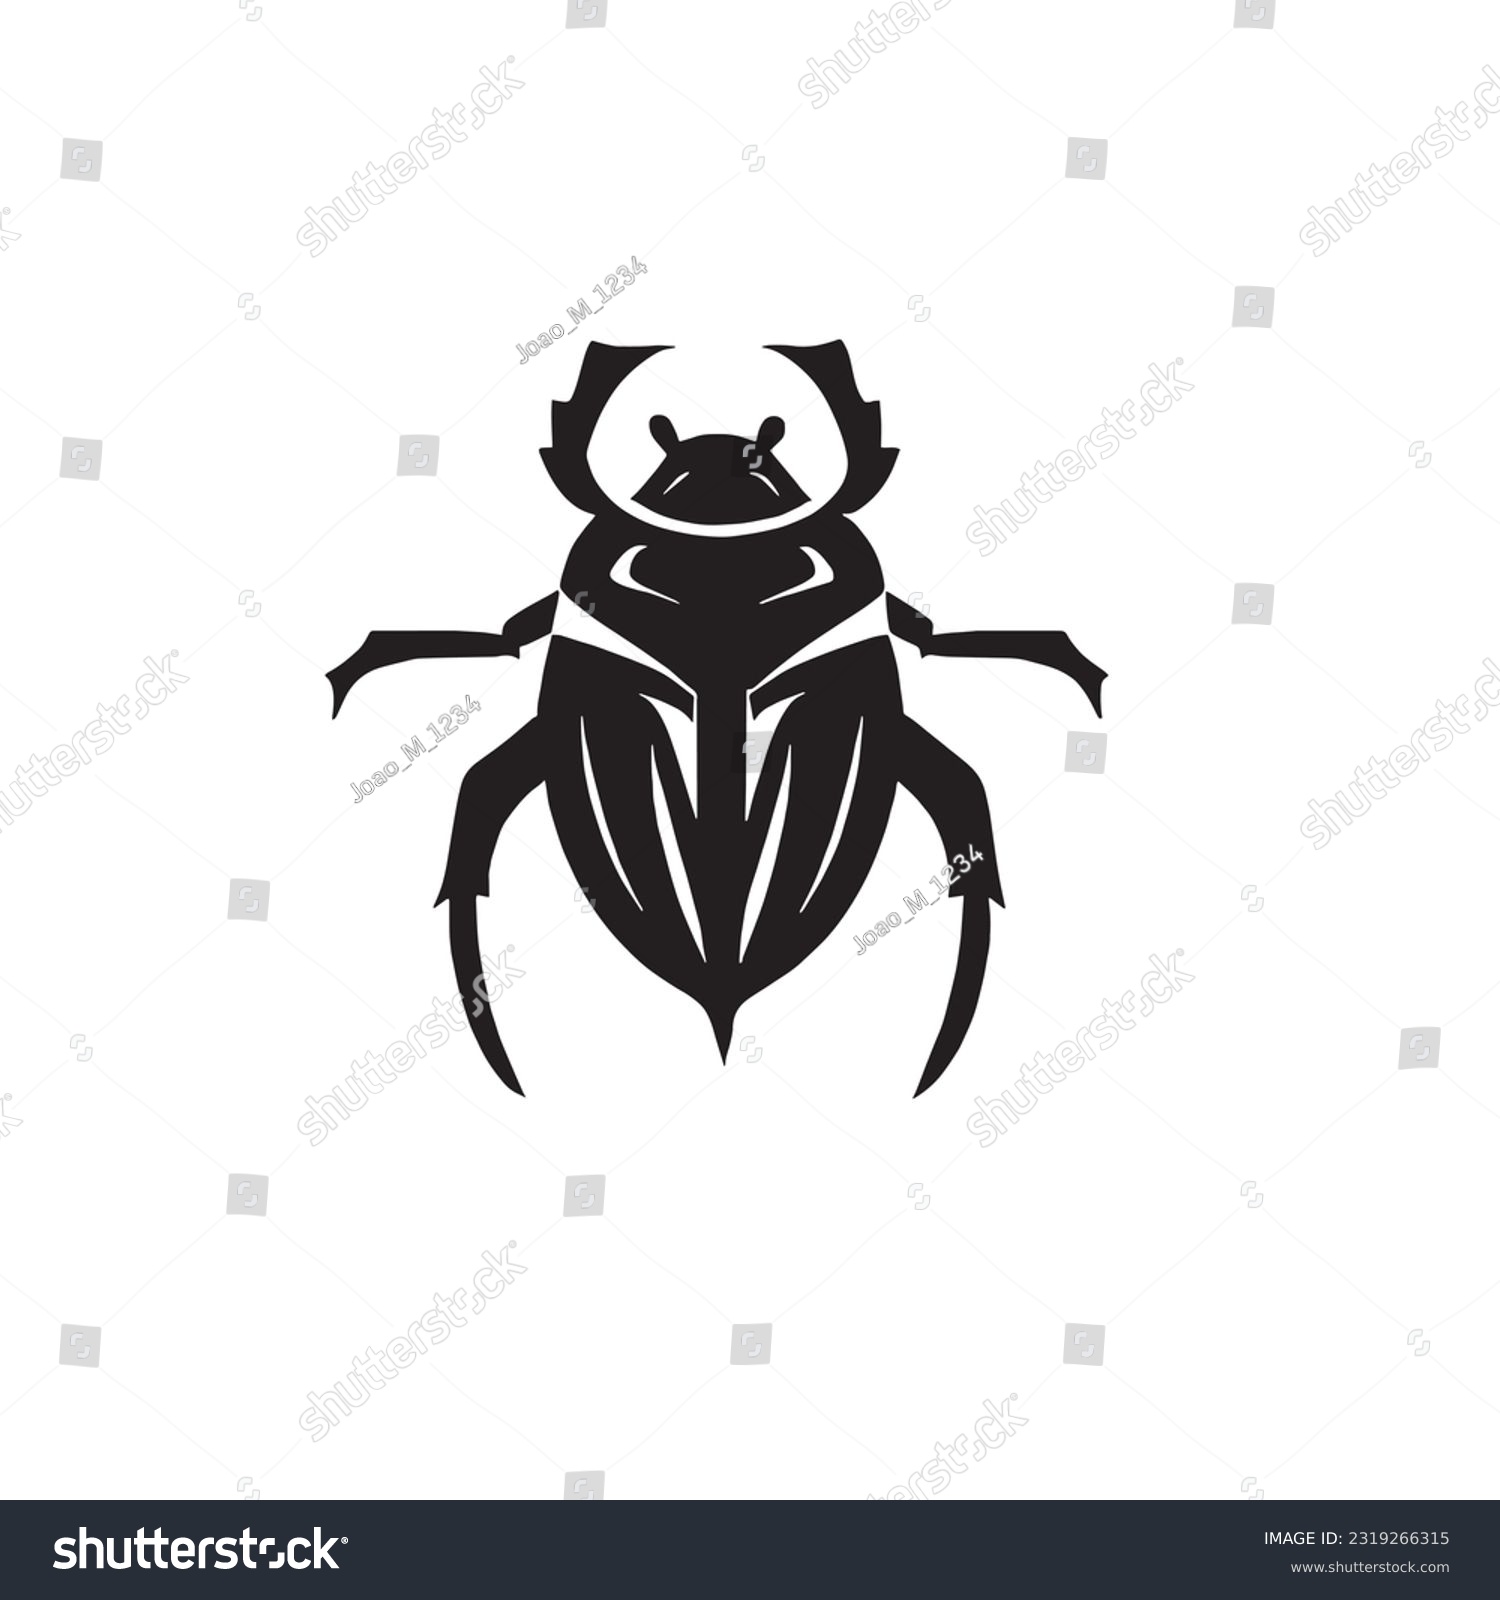 SVG of beetle icon in black color svg